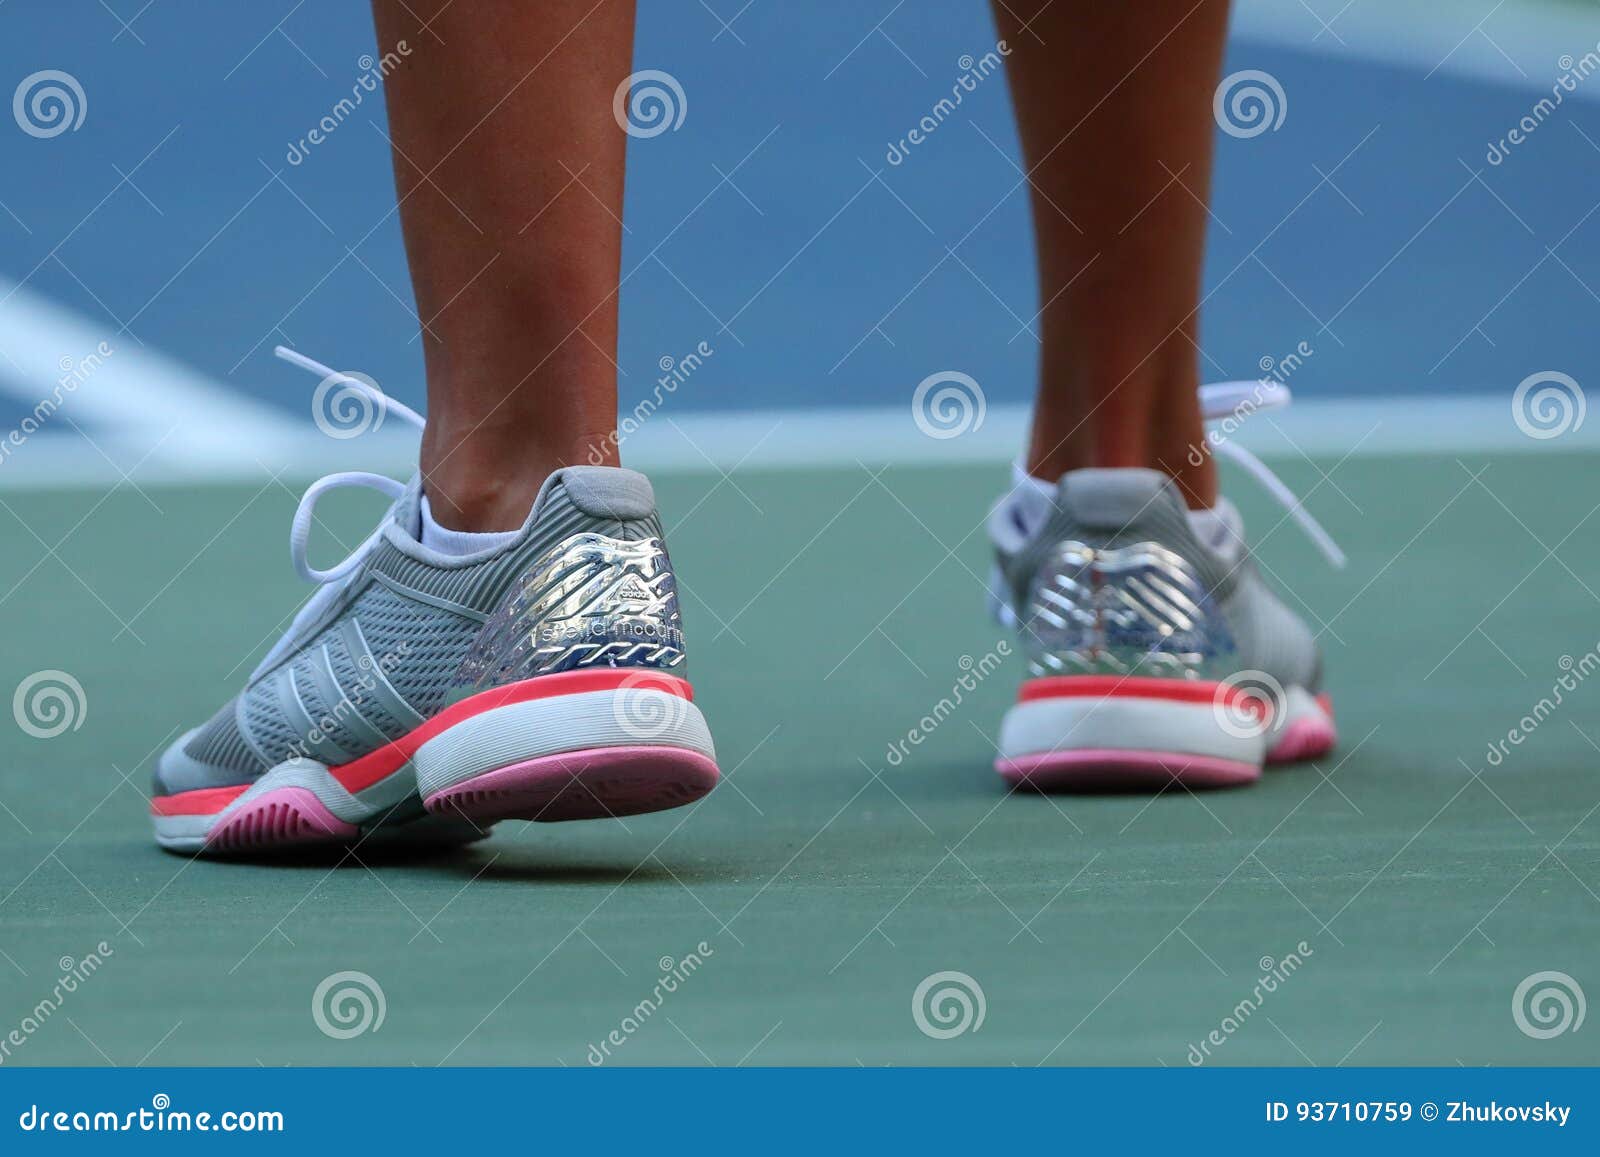 adidas stella tennis shoes